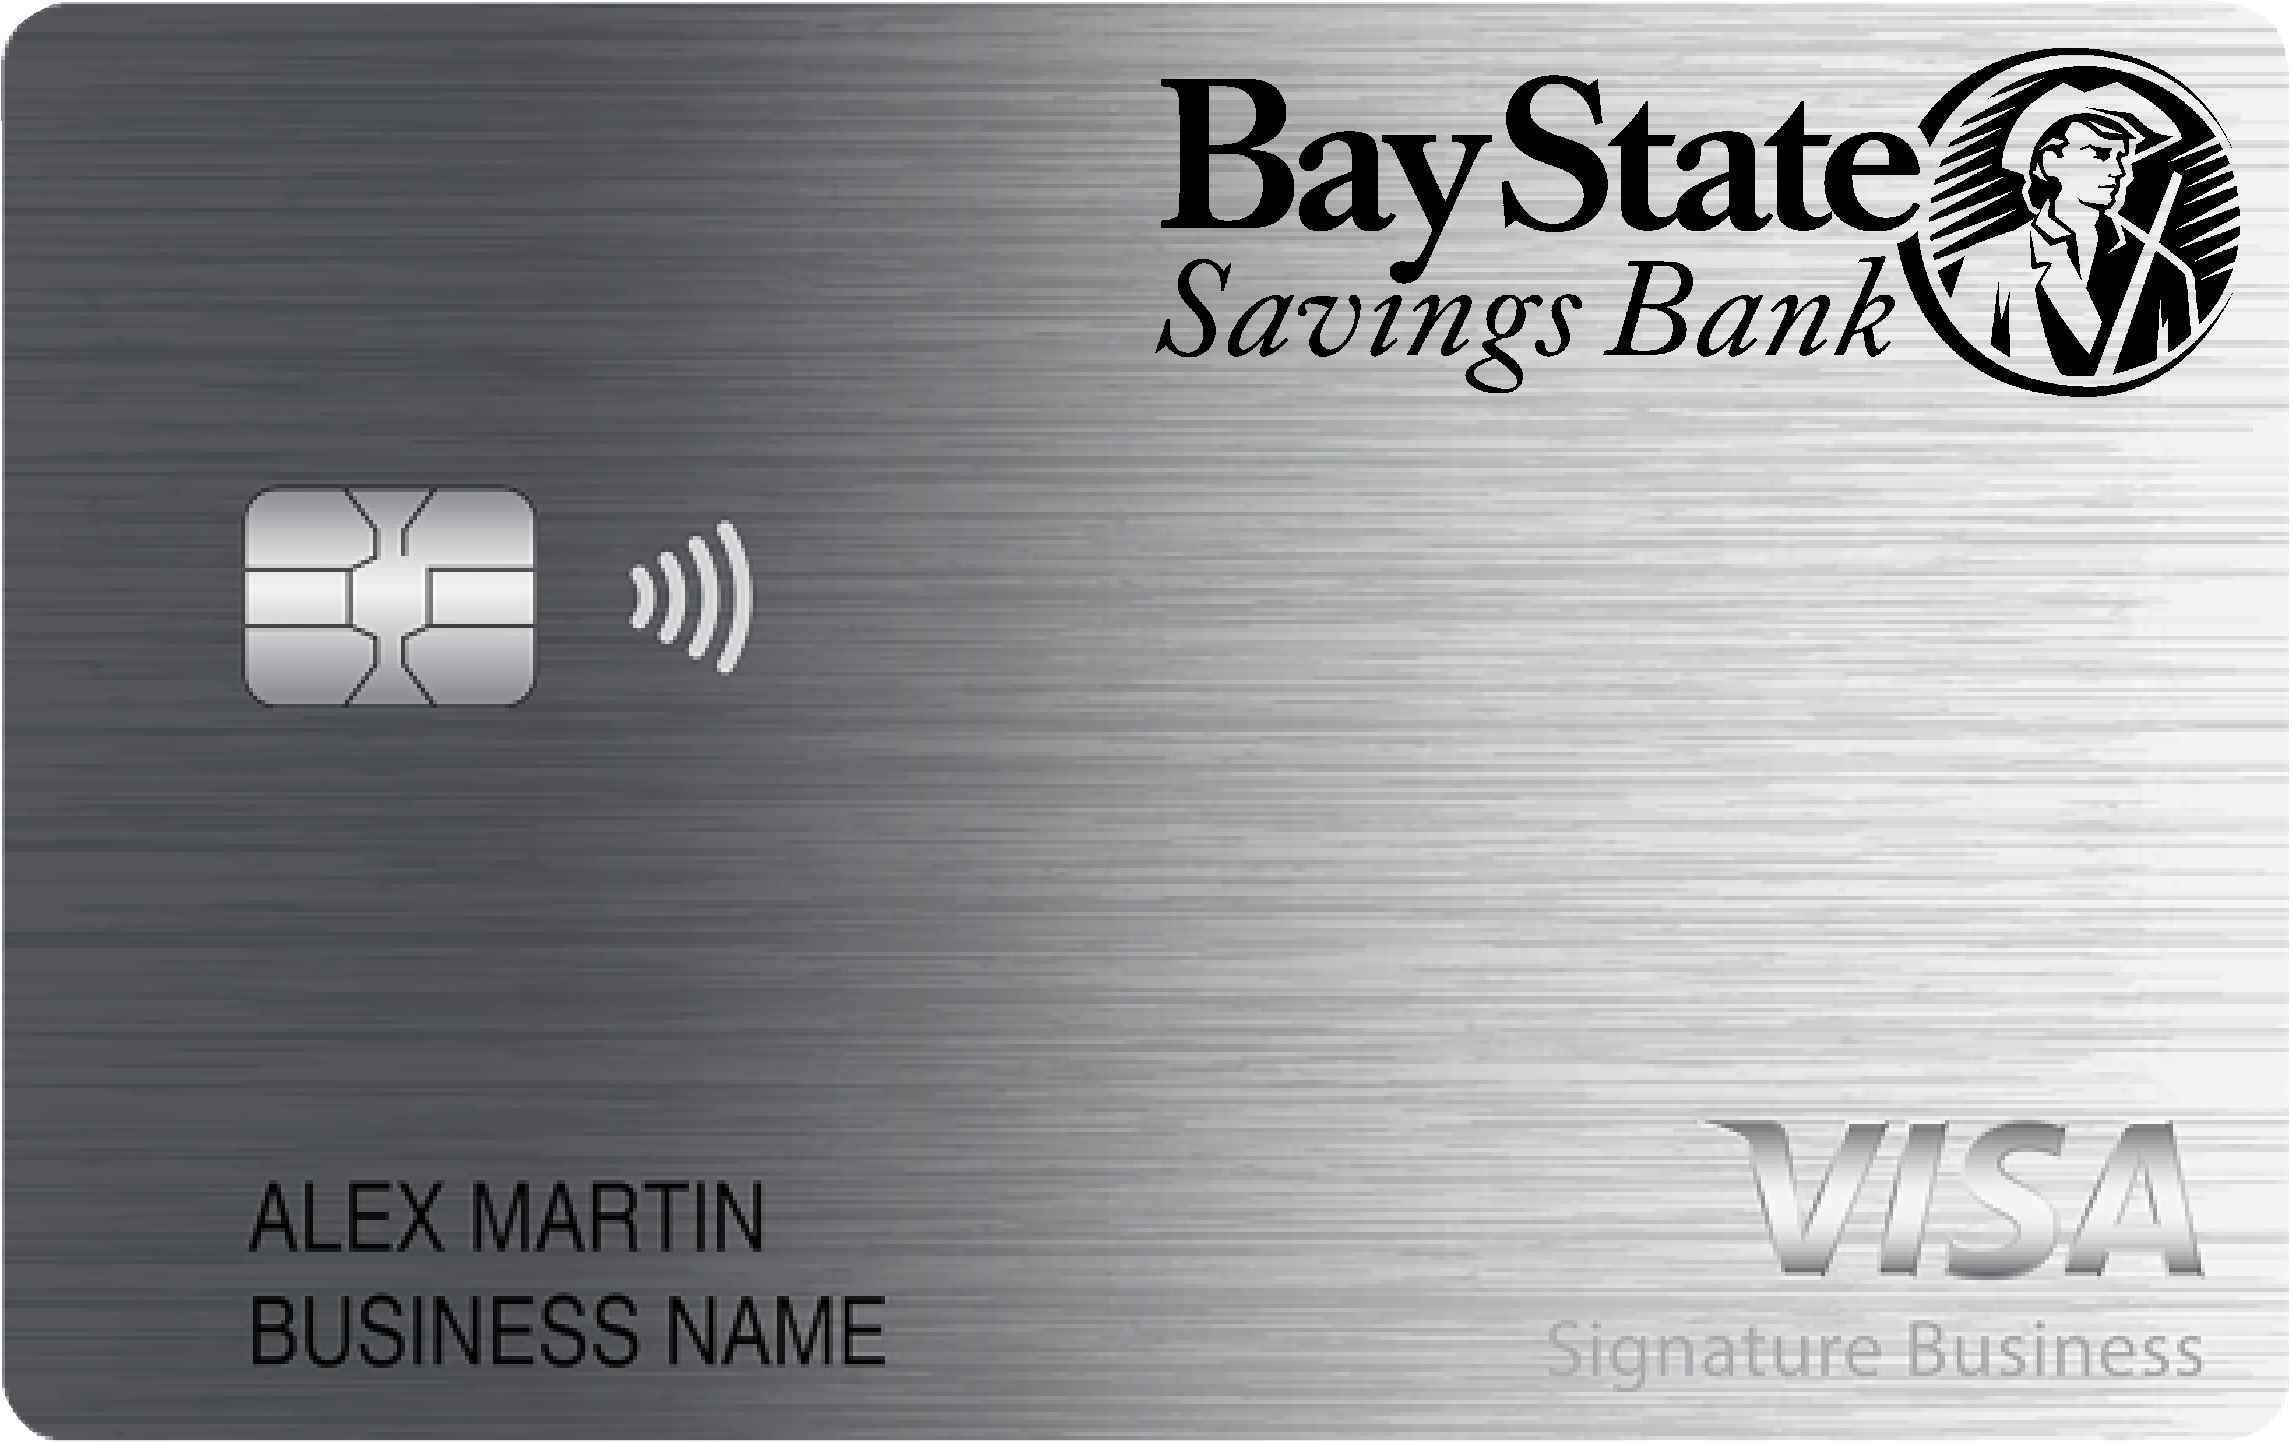 Bay State Savings Bank Smart Business Rewards Card